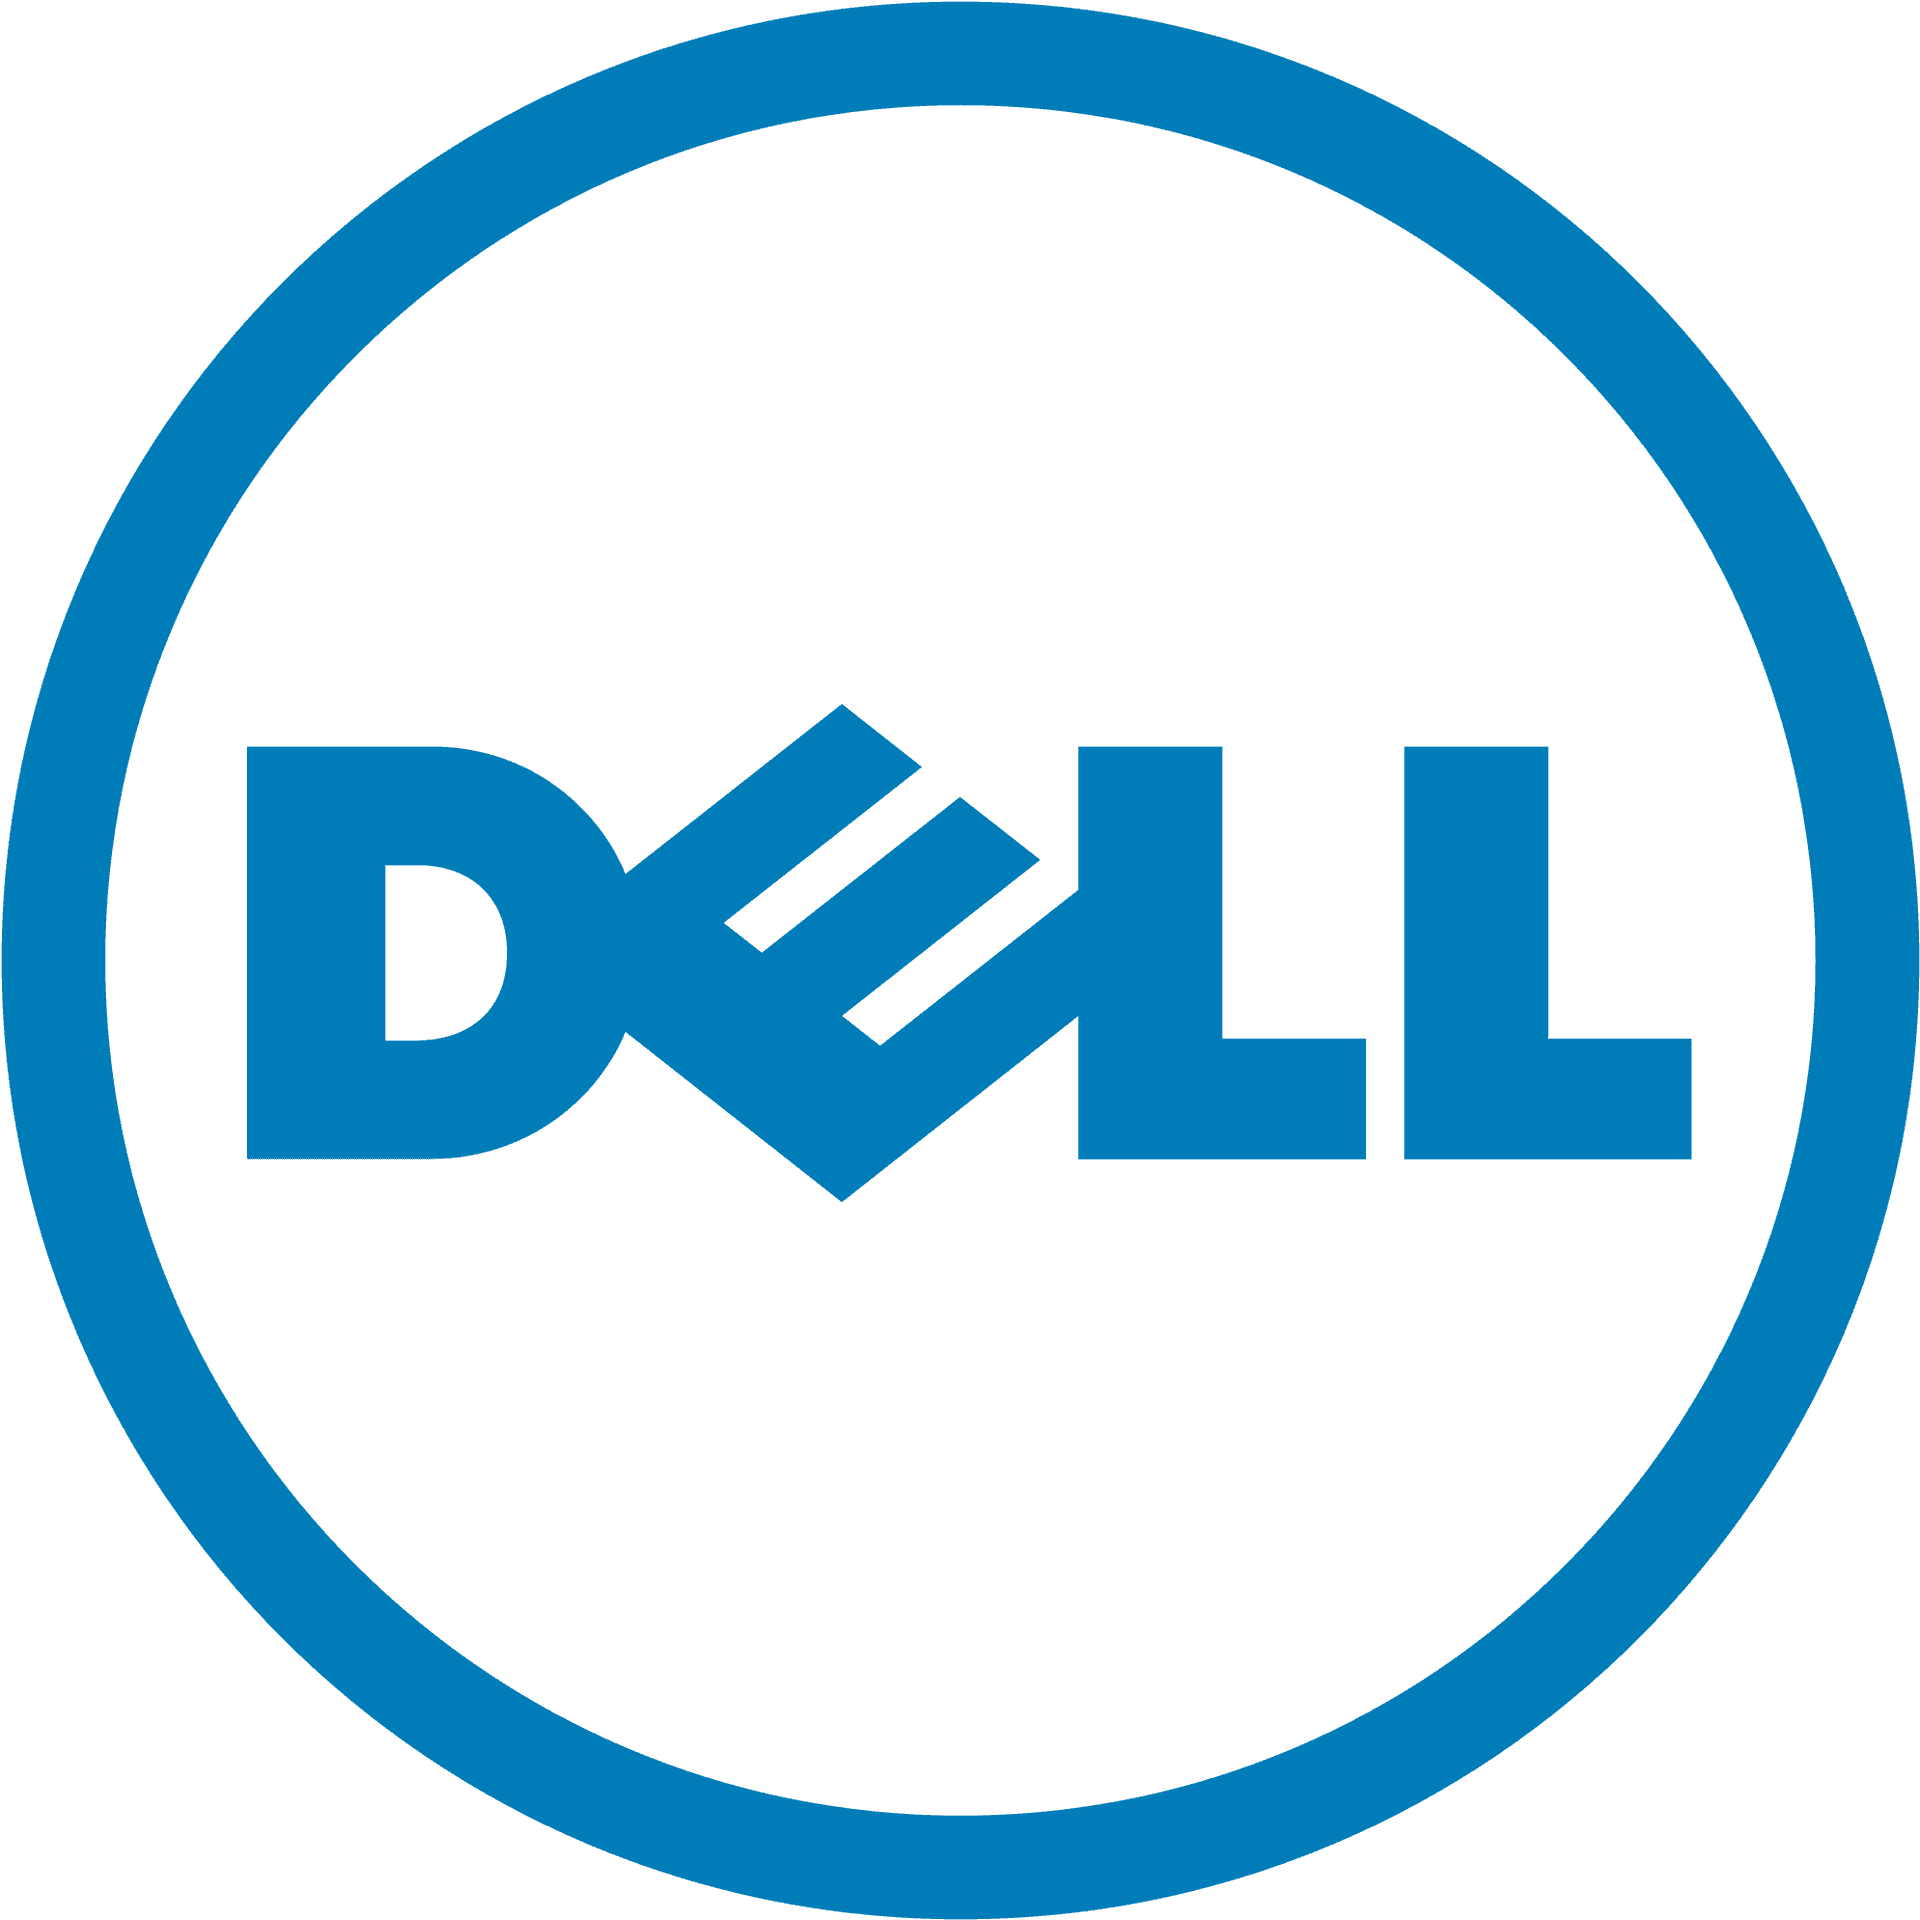 Dell Logo Blue Background PNG